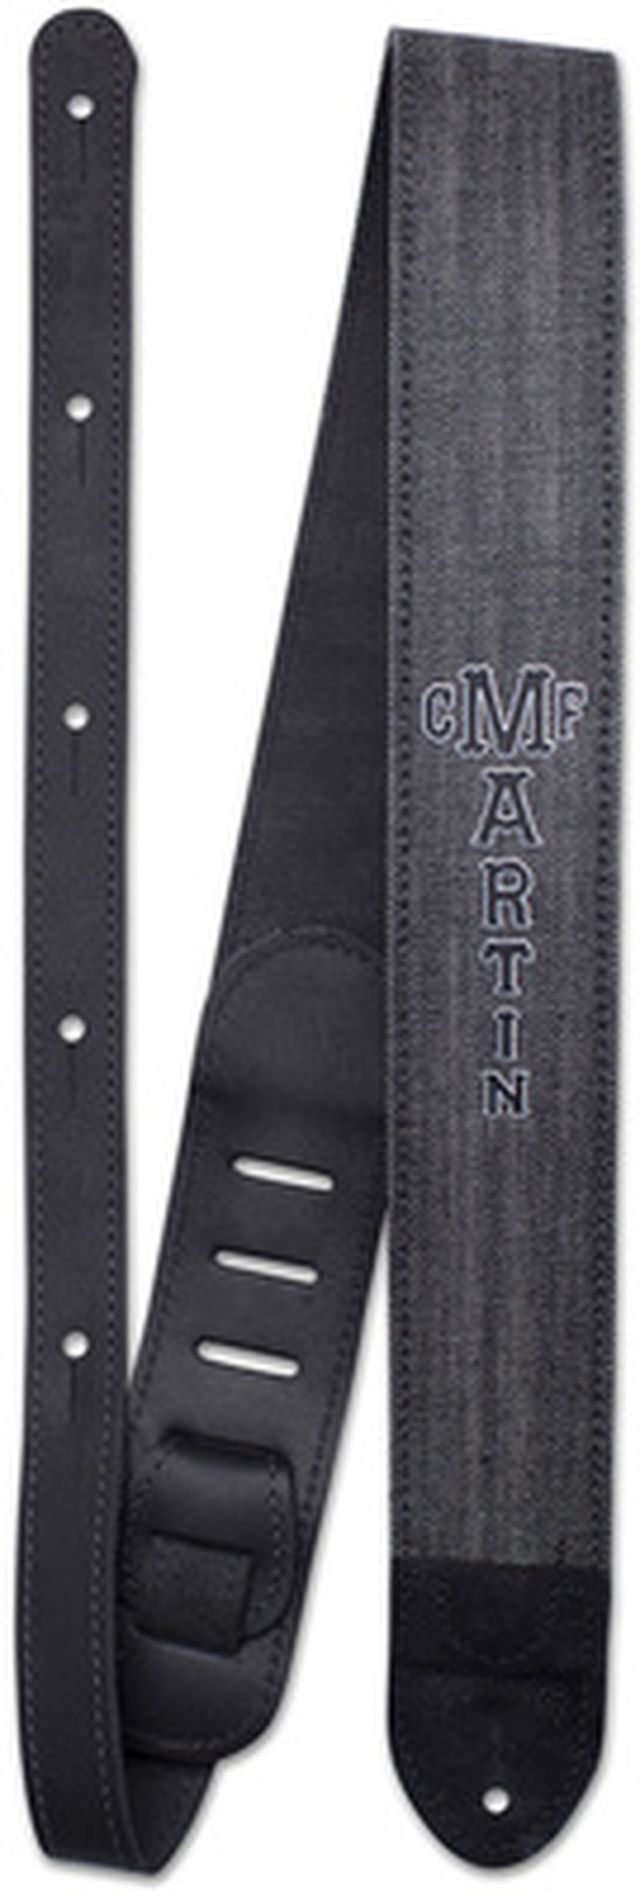 Martin Guitars Black Denim & Leather Strap